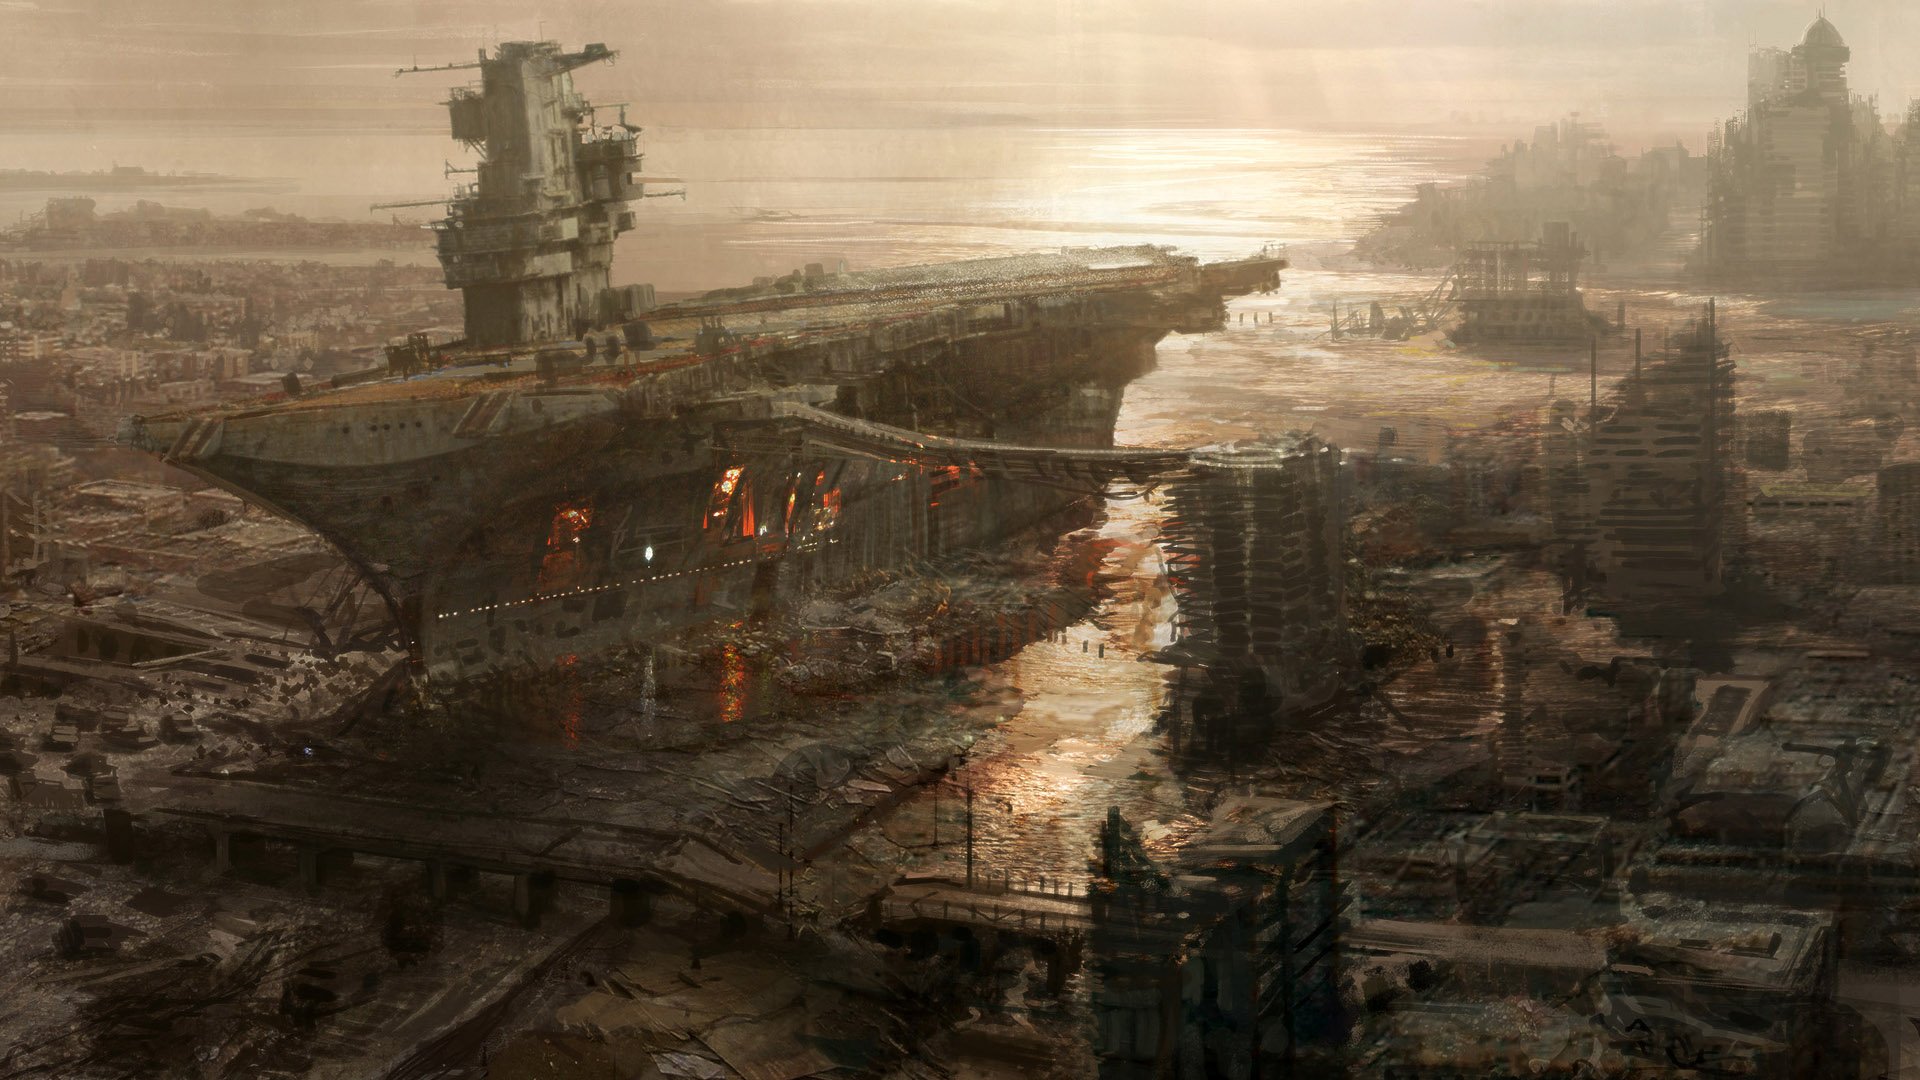 Sci Fi cityscape with ship resembling Fallout's Rivet City as HD desktop wallpaper.